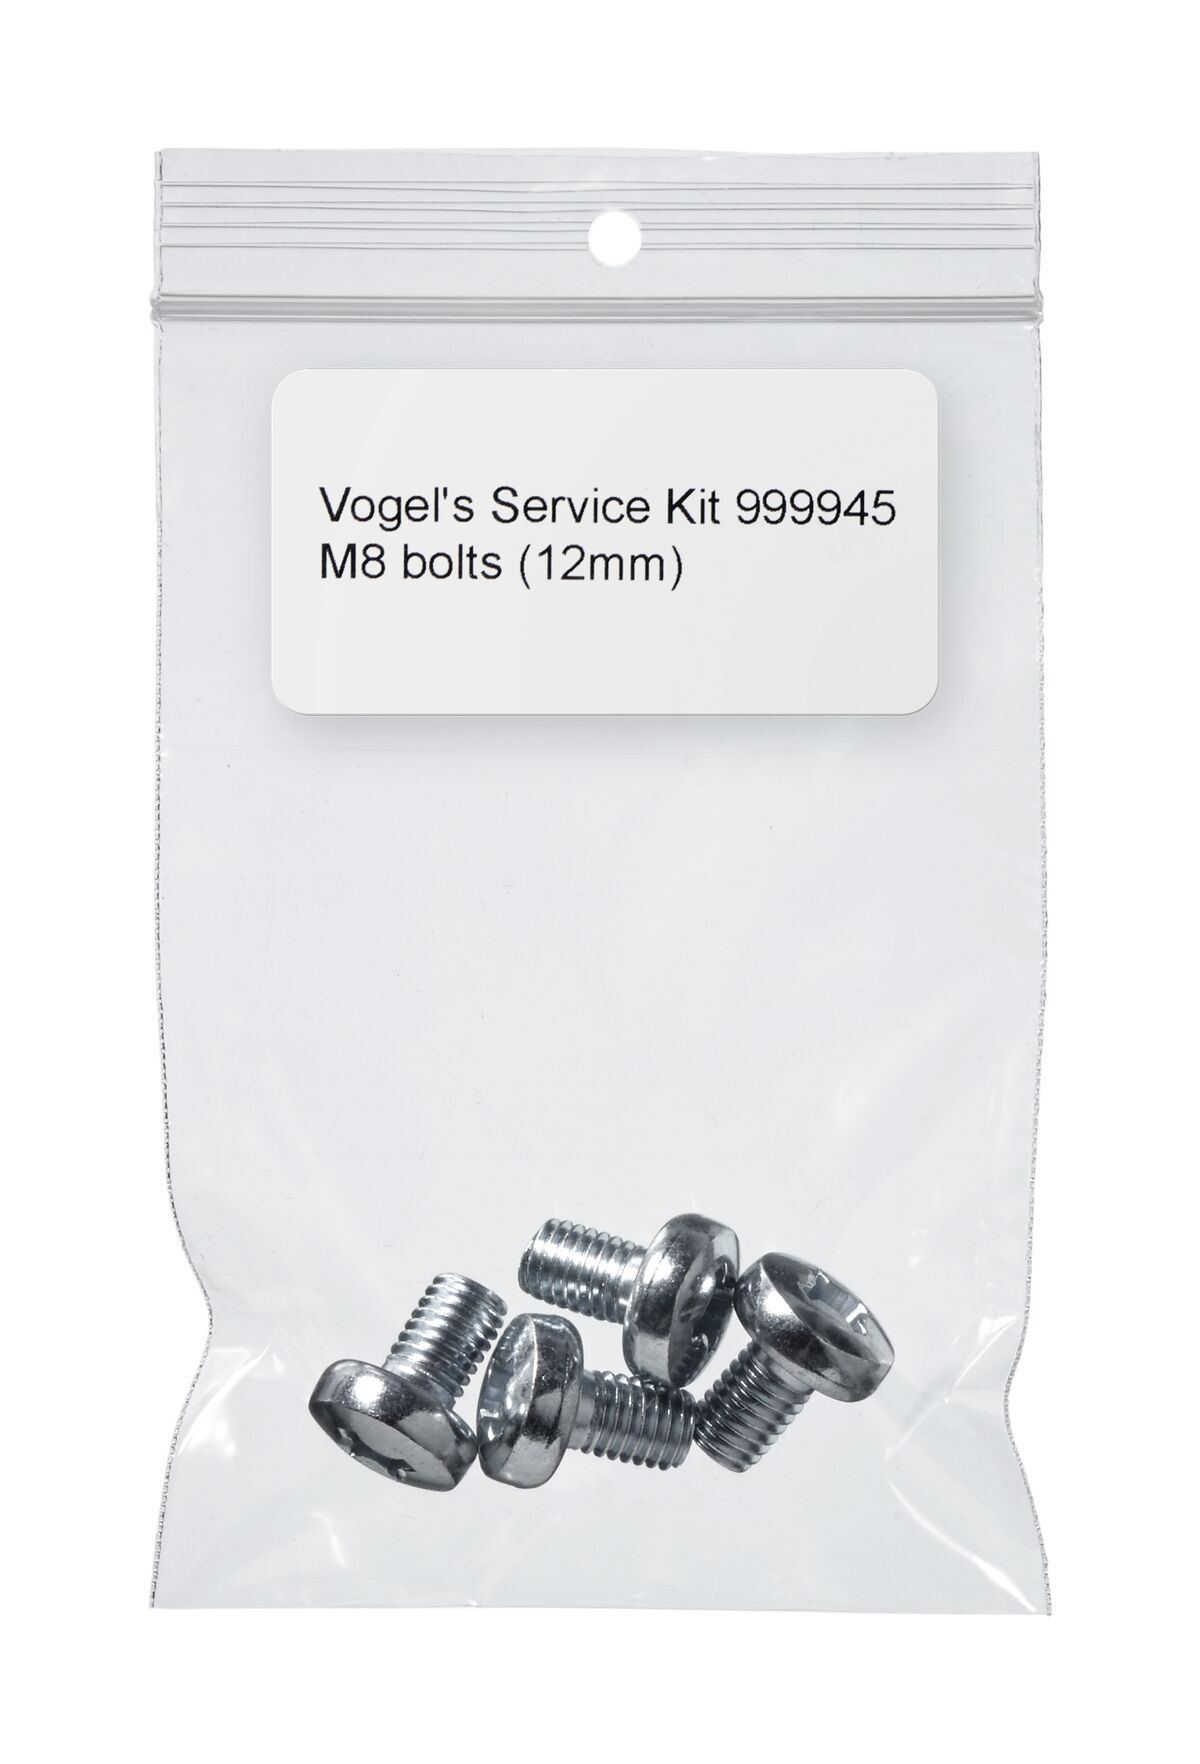 Vogel's Service Kit - M8 bolts (12 mm) - Product